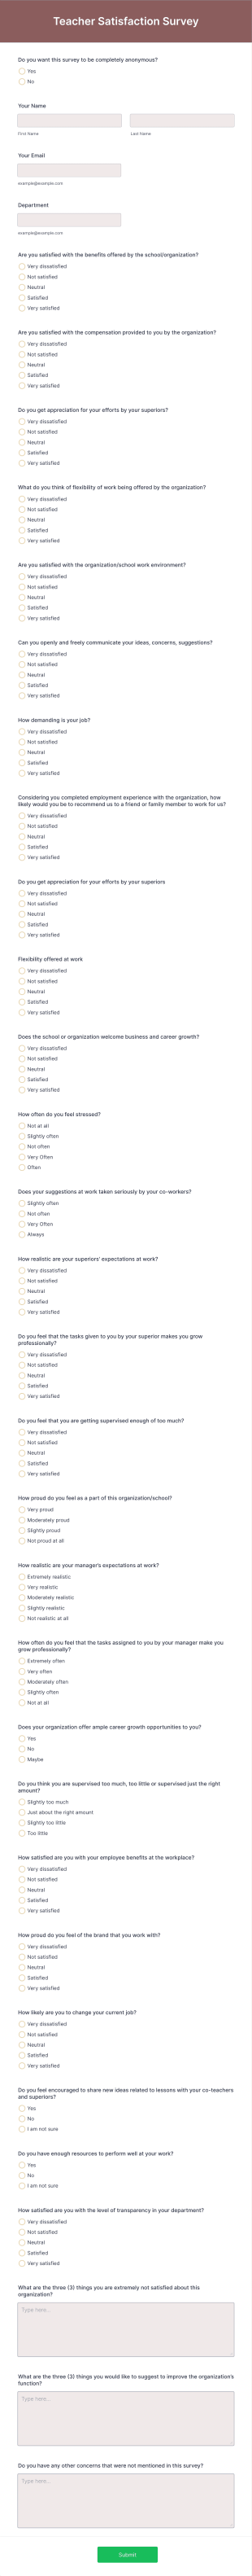 Teacher Satisfaction Survey Form Template